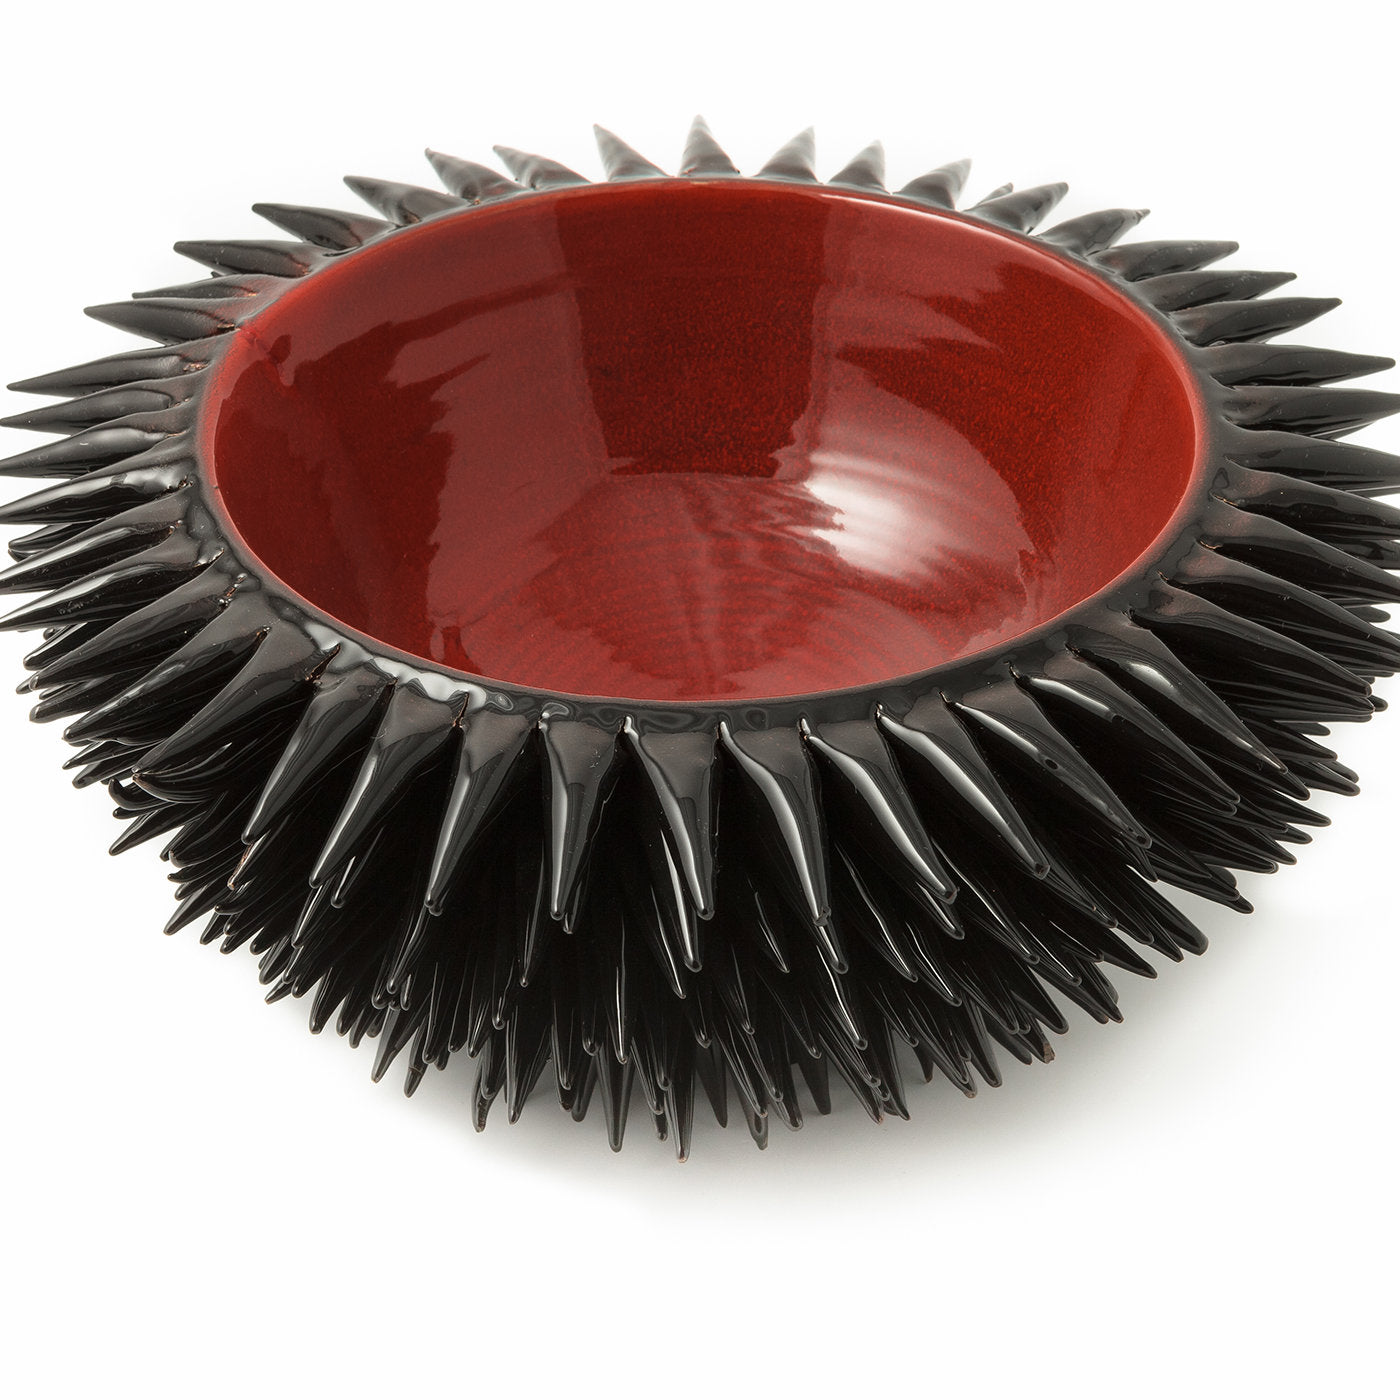 Sea Urchin Bowl Black - Alternative view 1